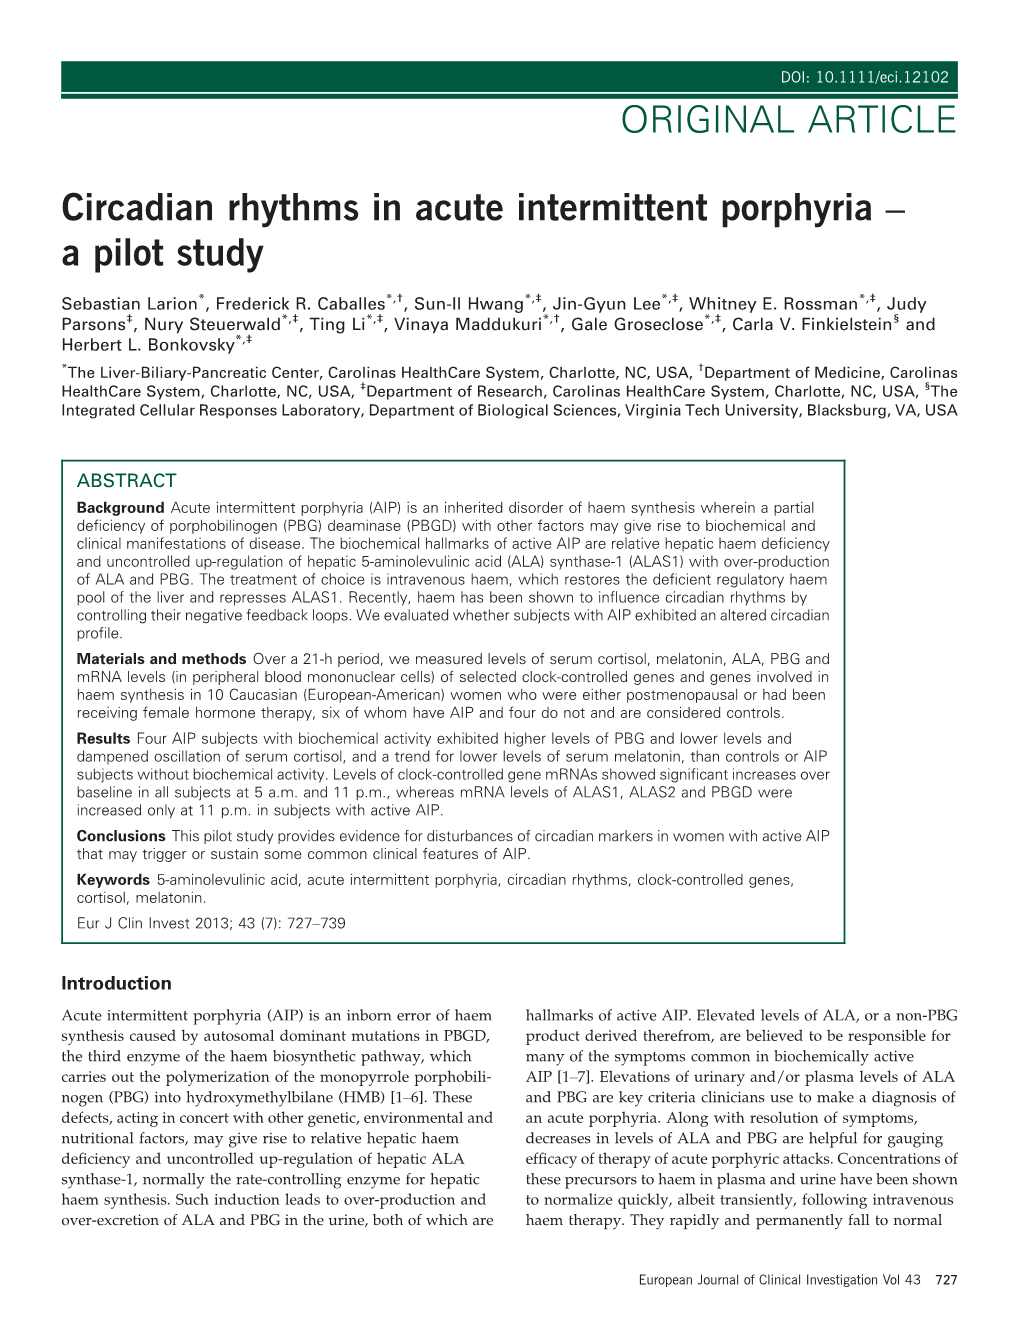 Circadian Rhythms in Acute Intermittent Porphyria a Pilot Study